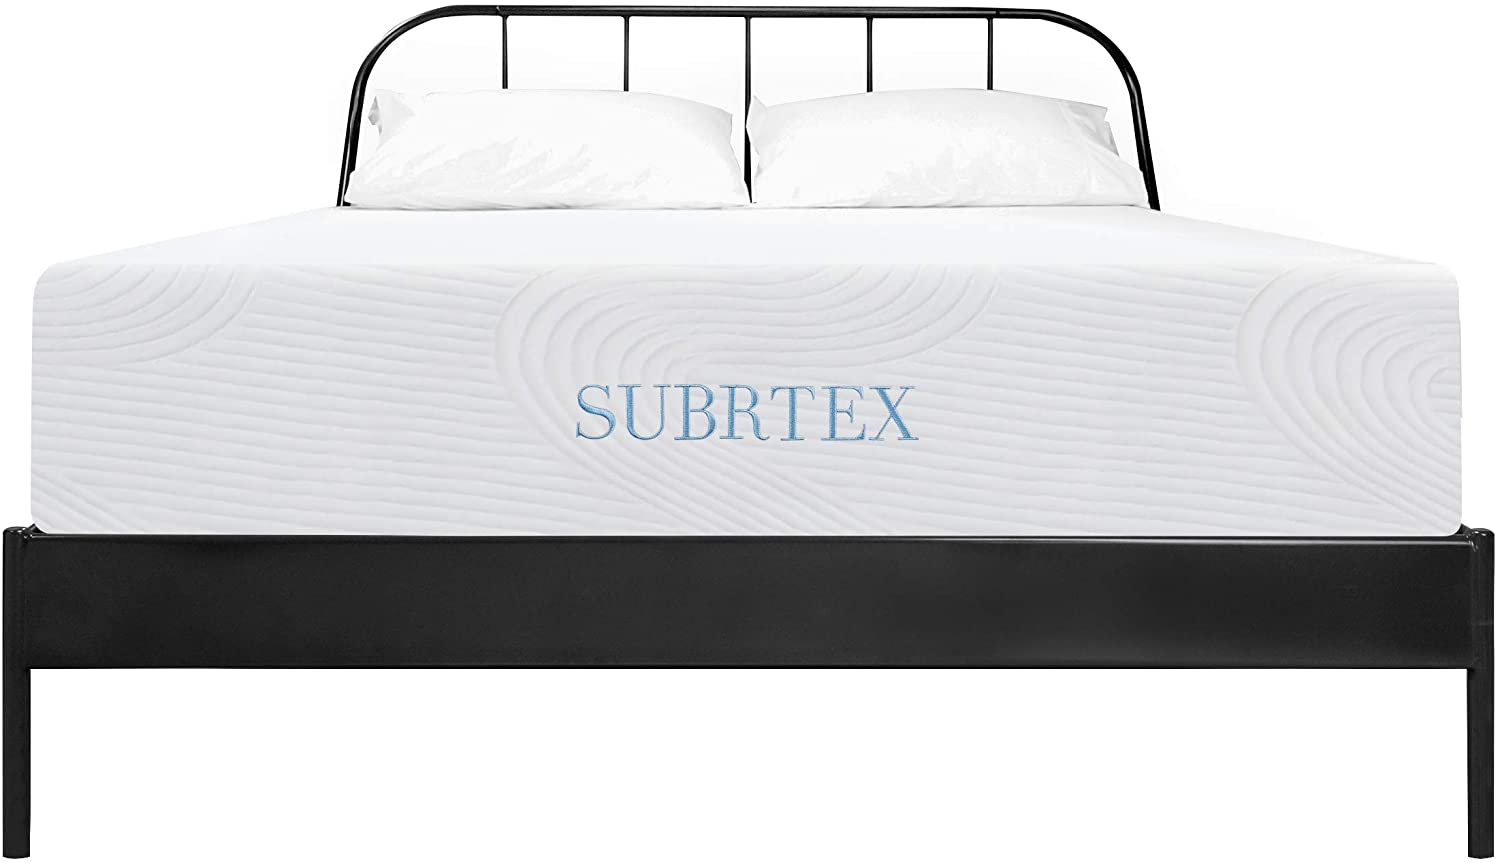 twin xl memory foam mattress for adjustable bed